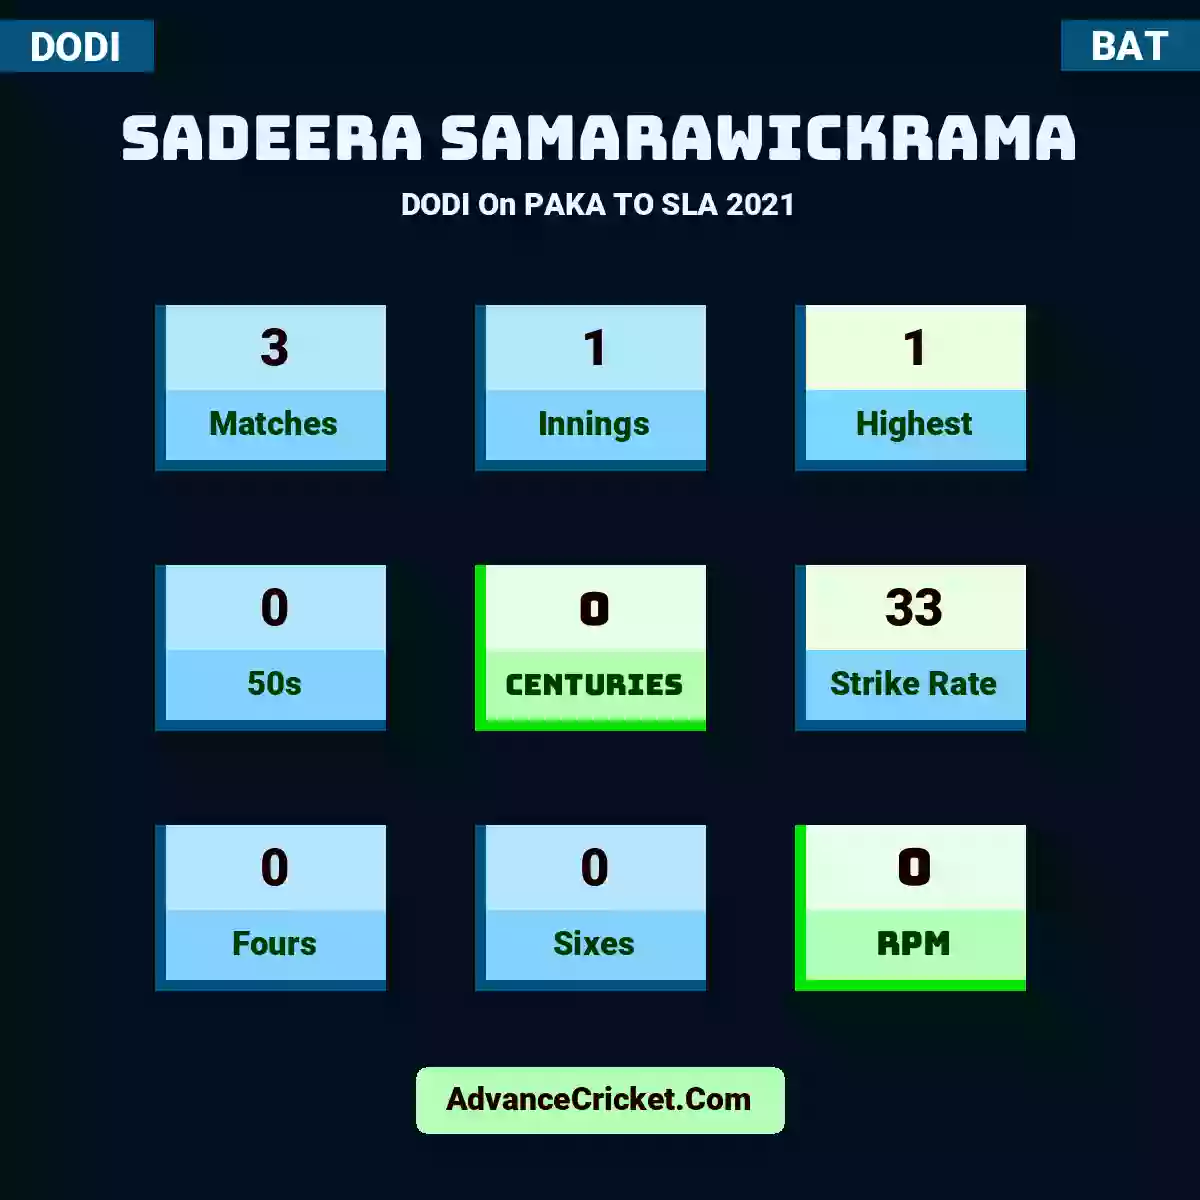 Sadeera Samarawickrama DODI  On PAKA TO SLA 2021, Sadeera Samarawickrama played 3 matches, scored 1 runs as highest, 0 half-centuries, and 0 centuries, with a strike rate of 33. S.Samarawickrama hit 0 fours and 0 sixes, with an RPM of 0.